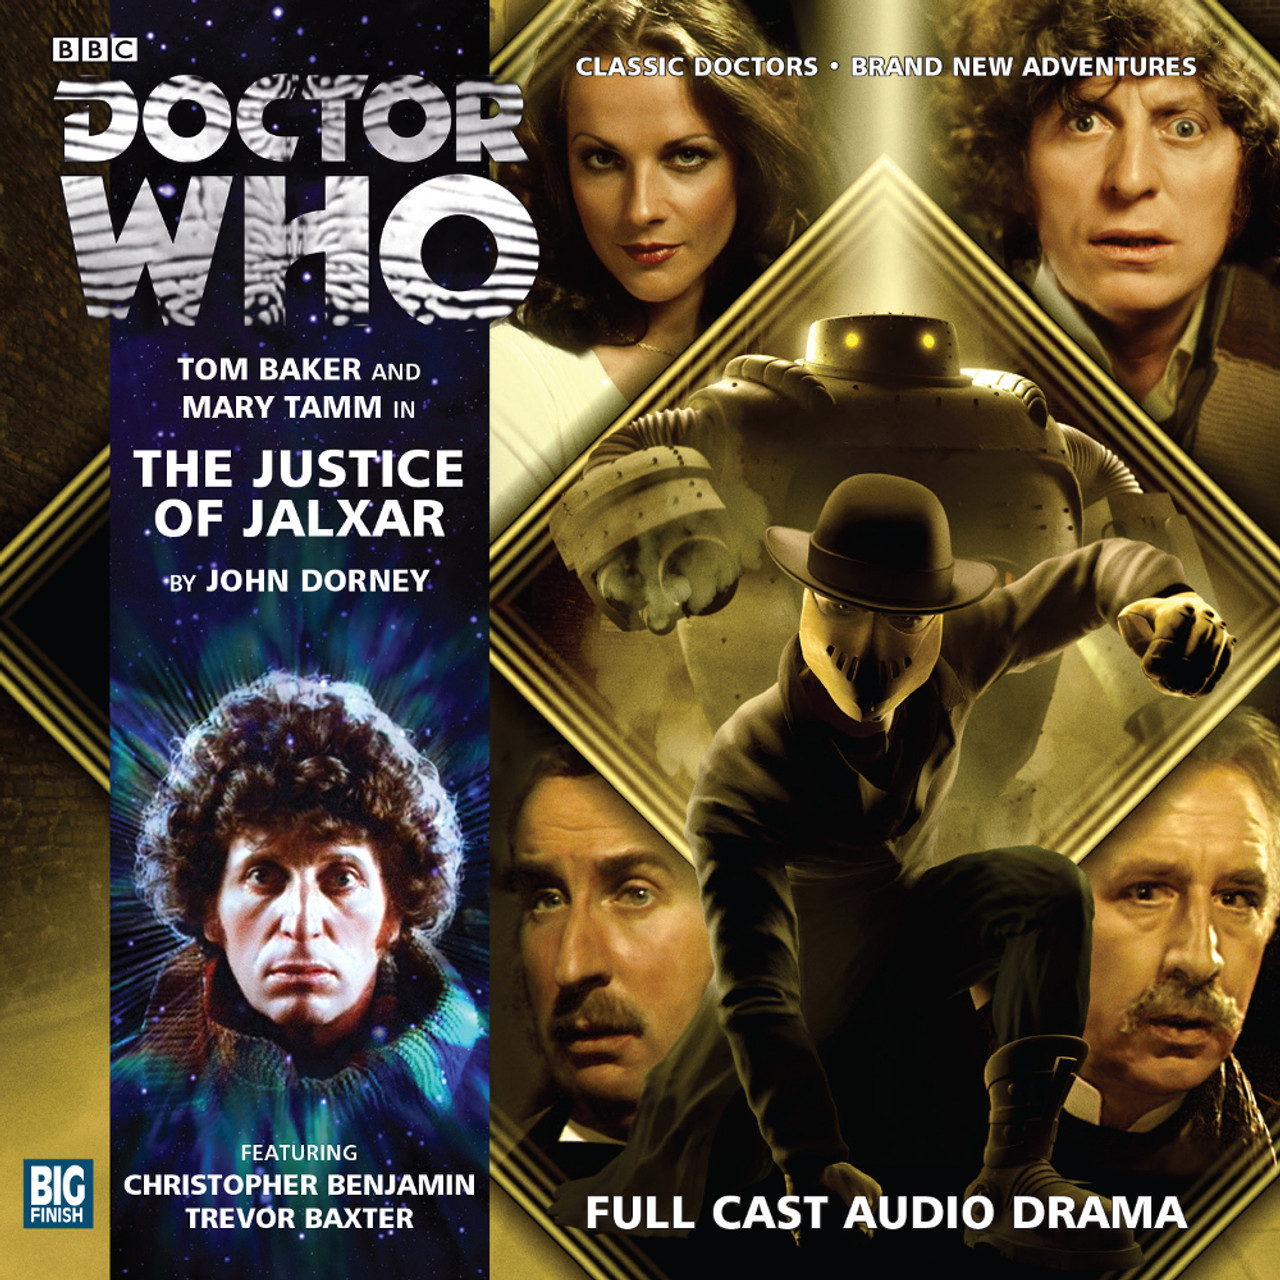 DOCTOR WHO Big Finish Audio CD Tom Baker 4th Doctor #1.1 DESTINATION NERVA NEW 